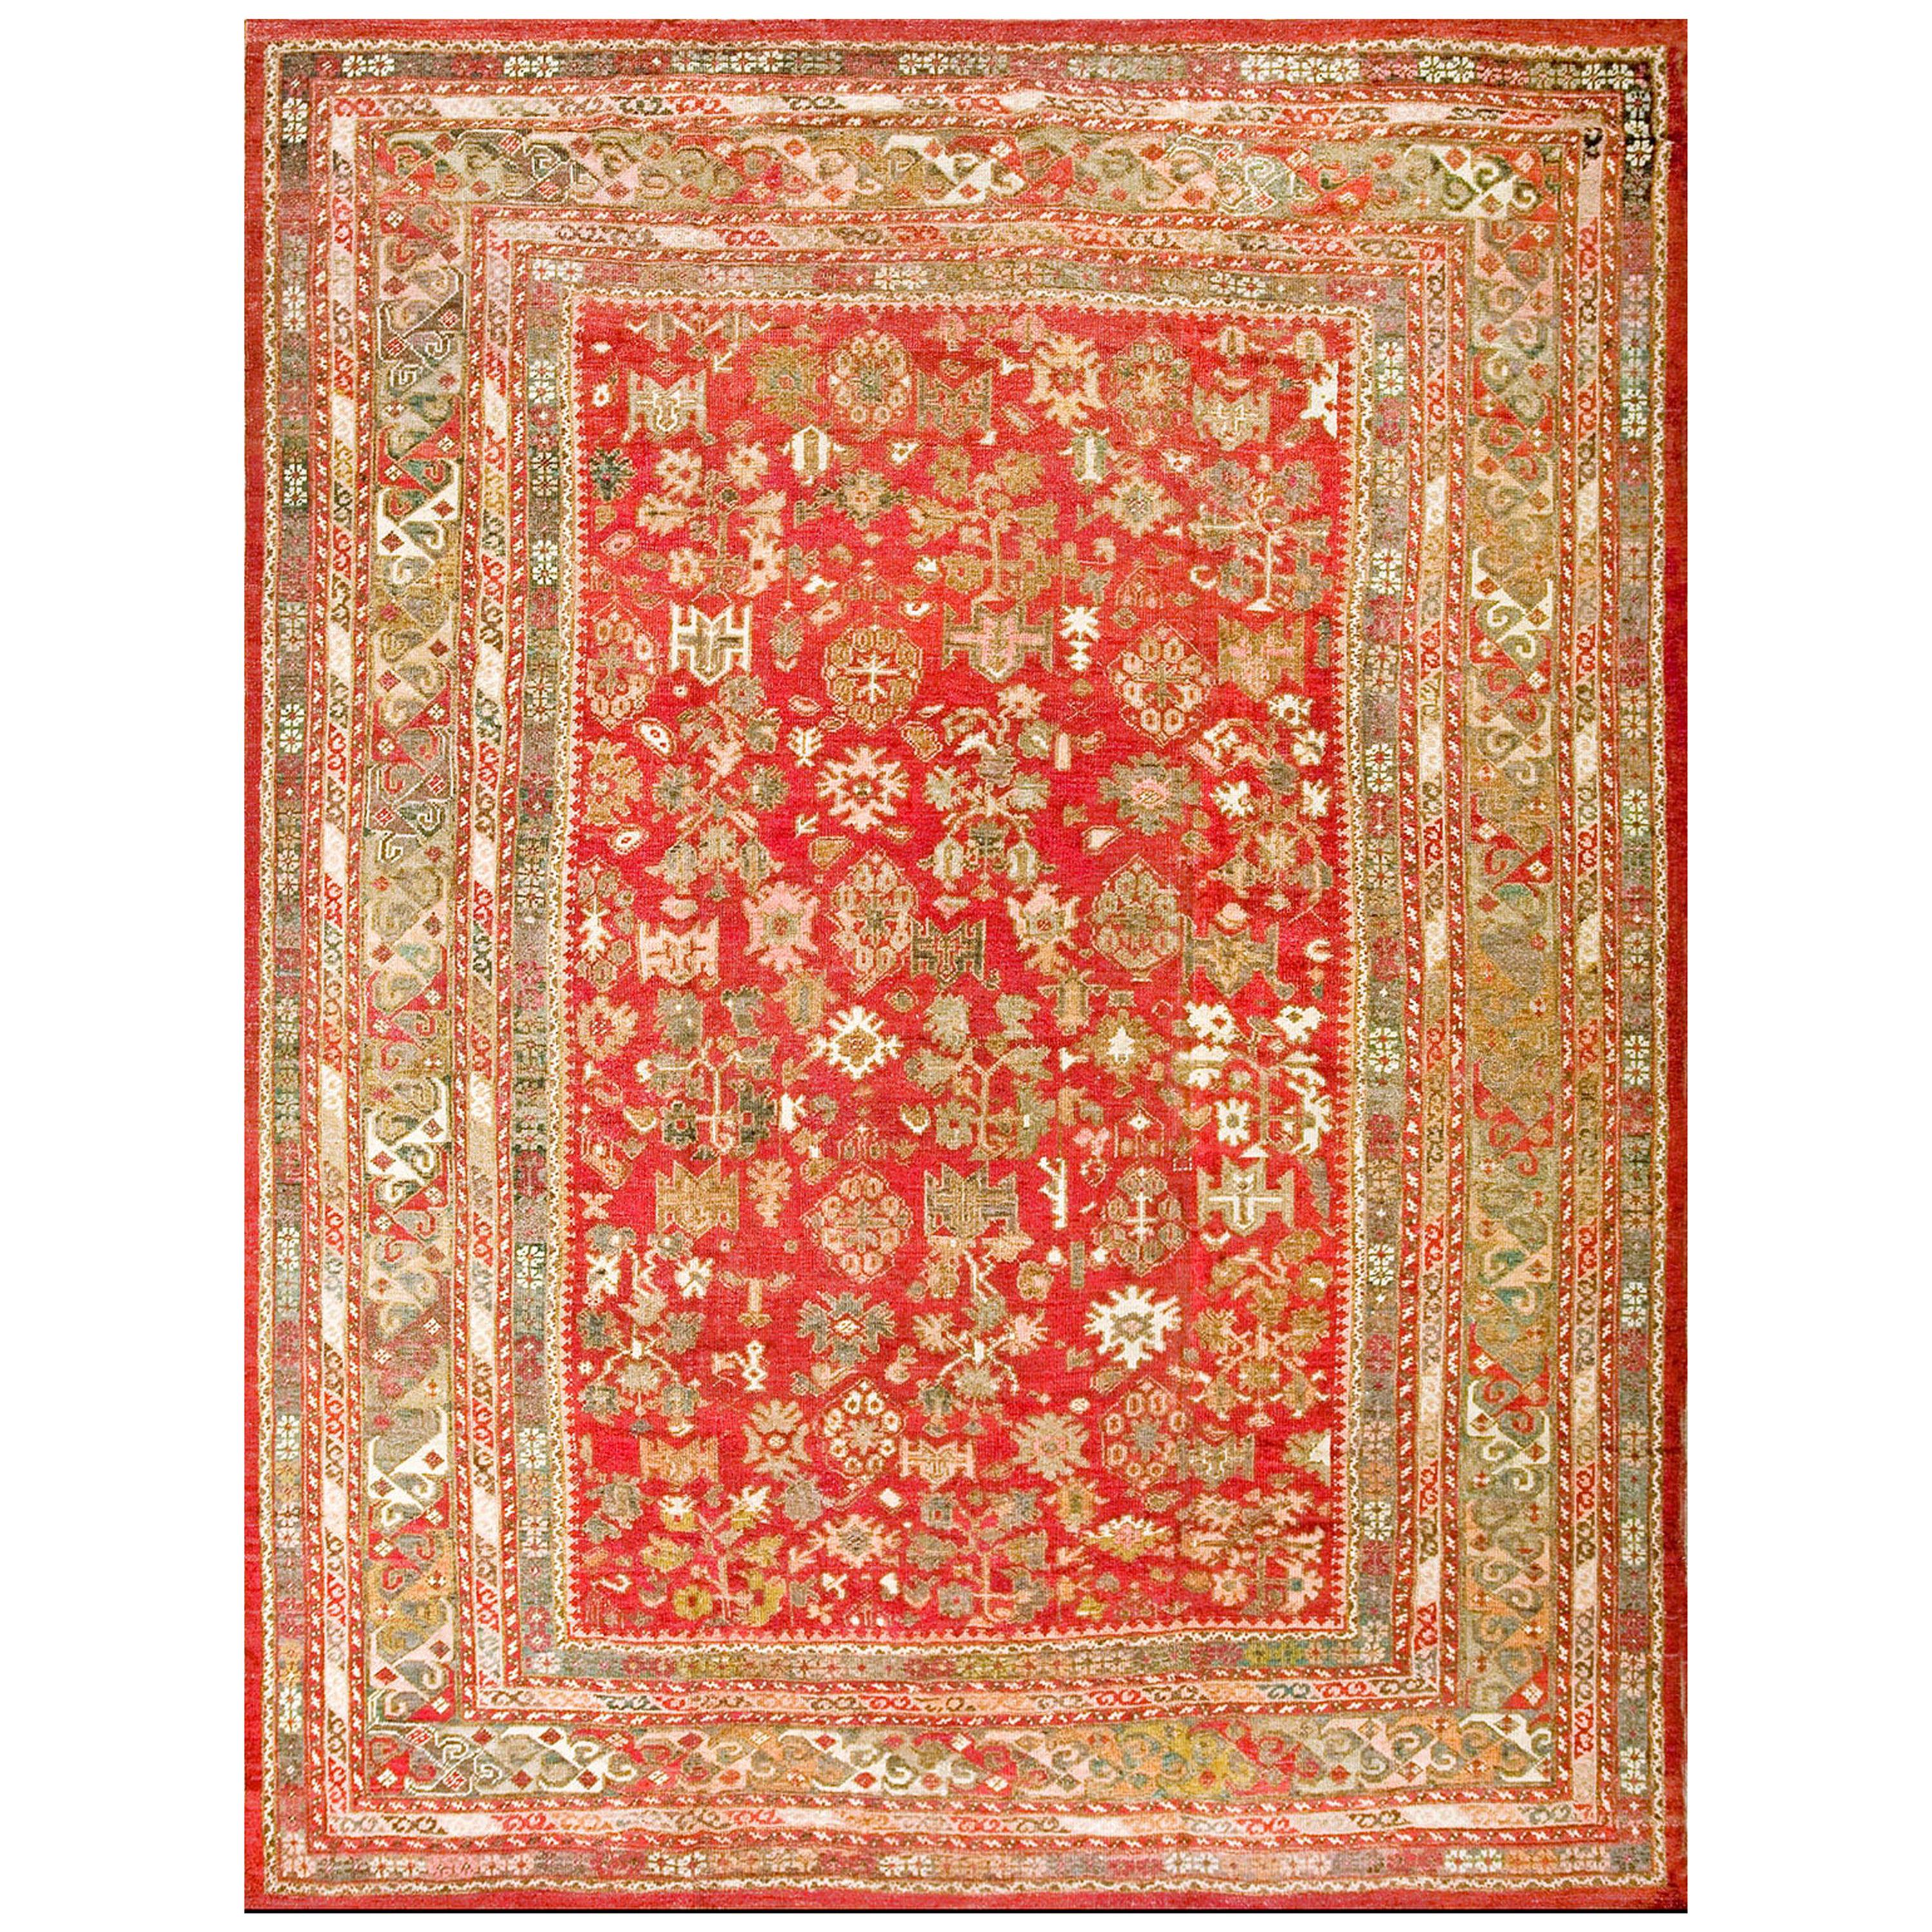 19th Century Turkish Ghiordes Oushak Carpet ( 9' x 11'8" - 275 x 355 ) For Sale